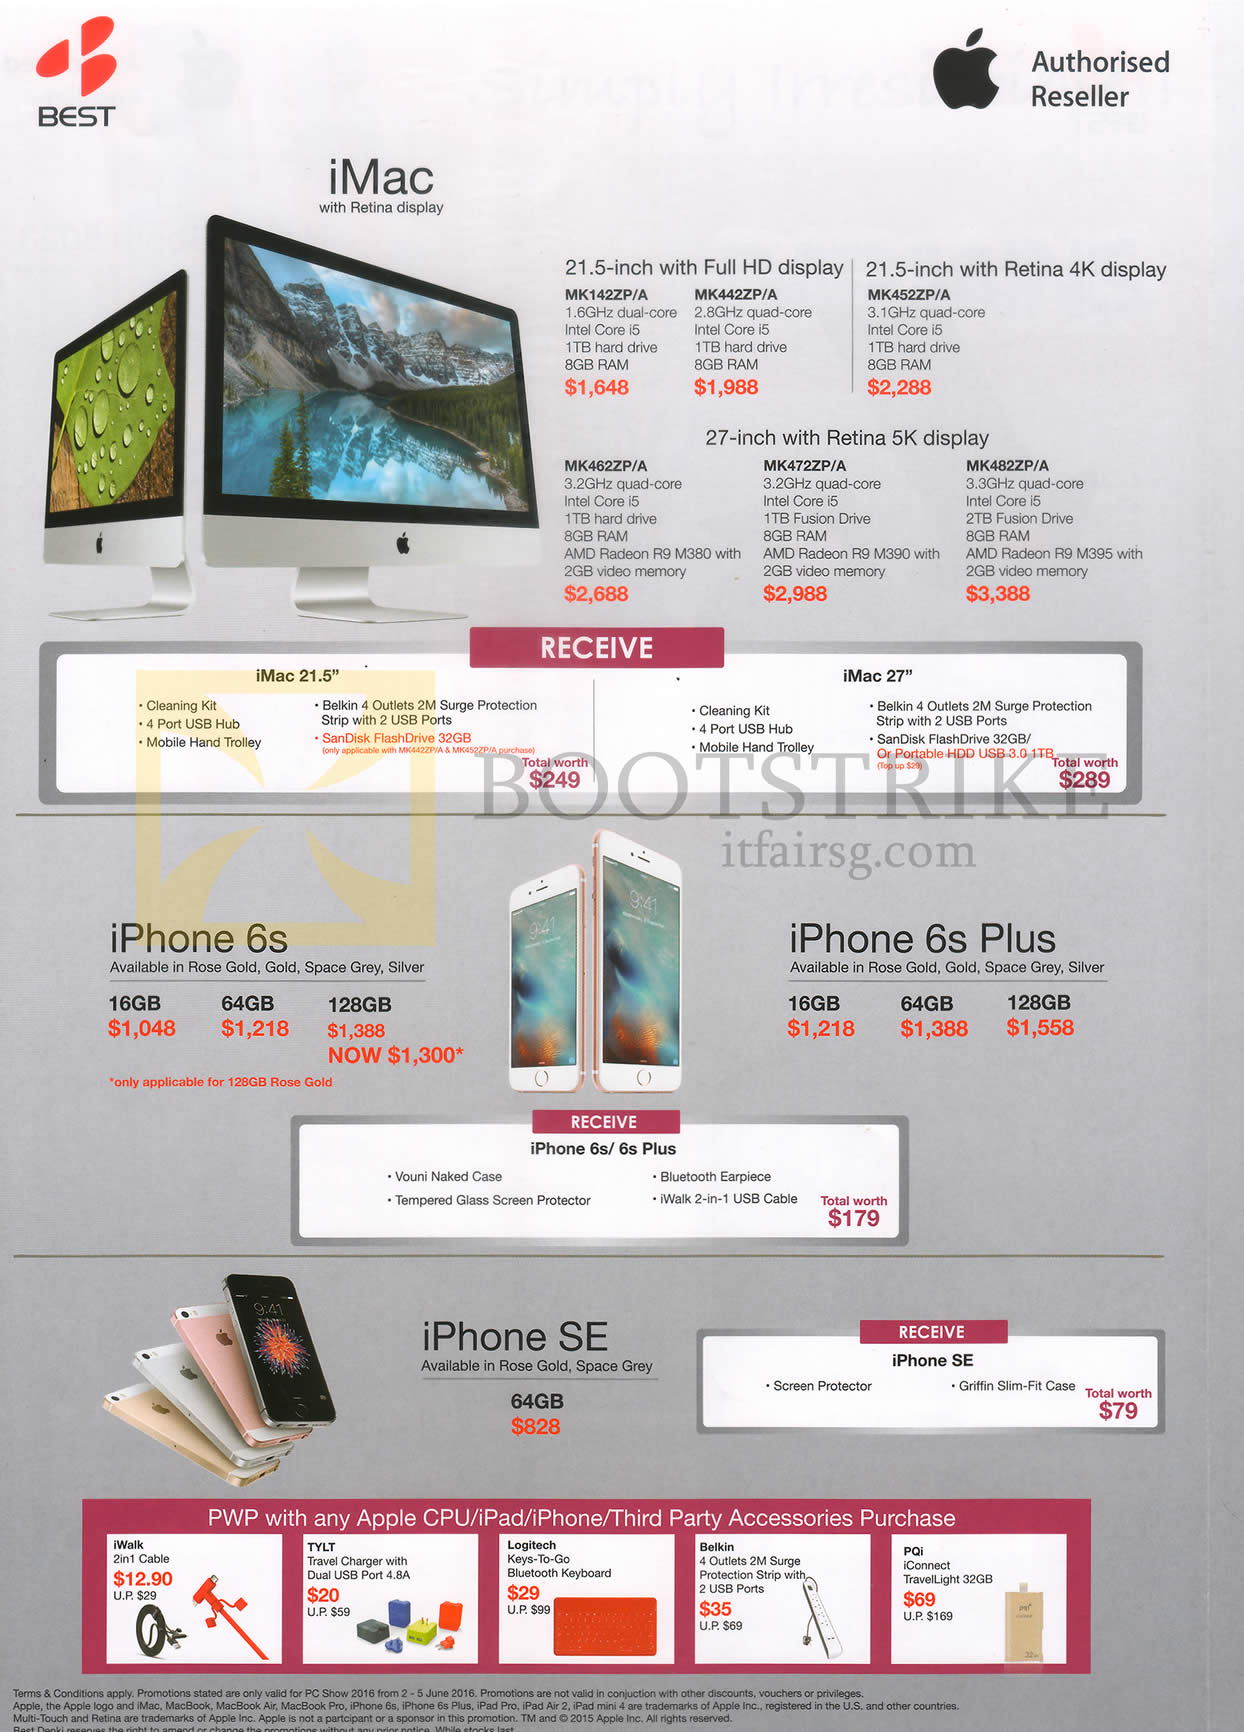 PC SHOW 2016 price list image brochure of Best Denki Apple AIO Desktop PC IMac, IPhone 6S, IPhone 6s Plus, IPhone SE, MK142ZP, MK442ZP, MK452ZP, MK462ZP, MK472ZP, MK482ZP